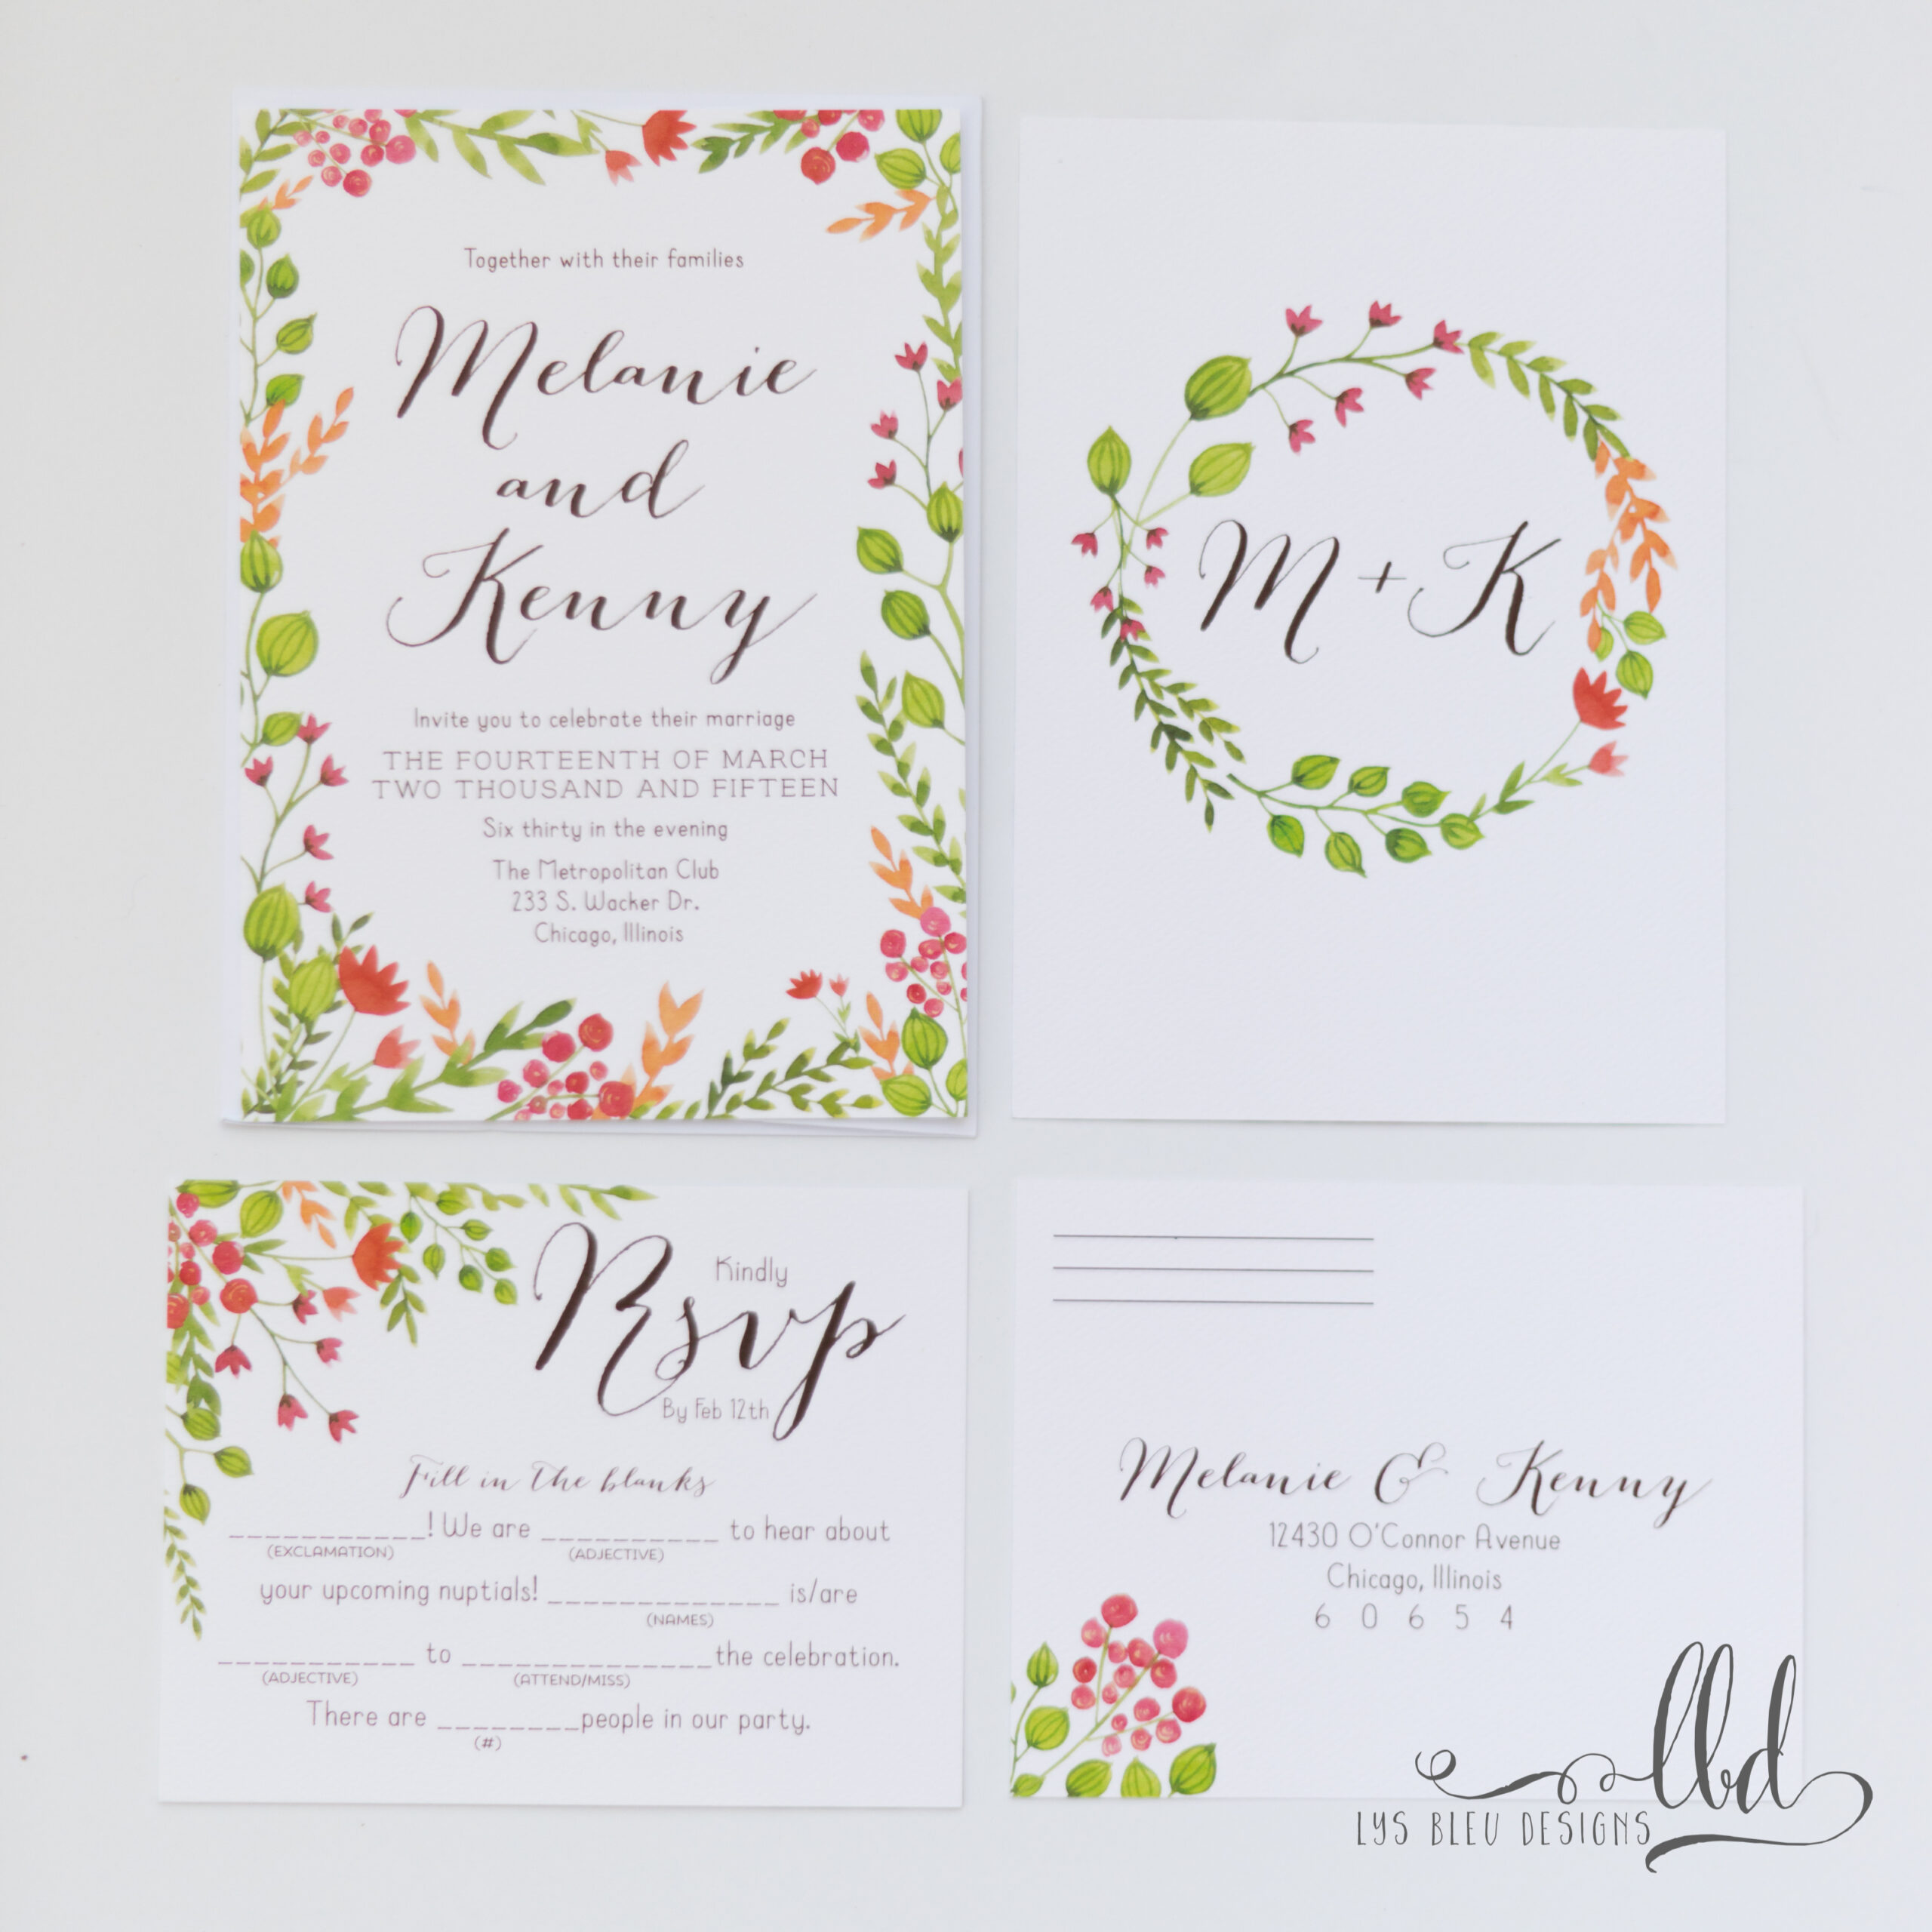 product photography - wedding invitations - product photographer - product photos